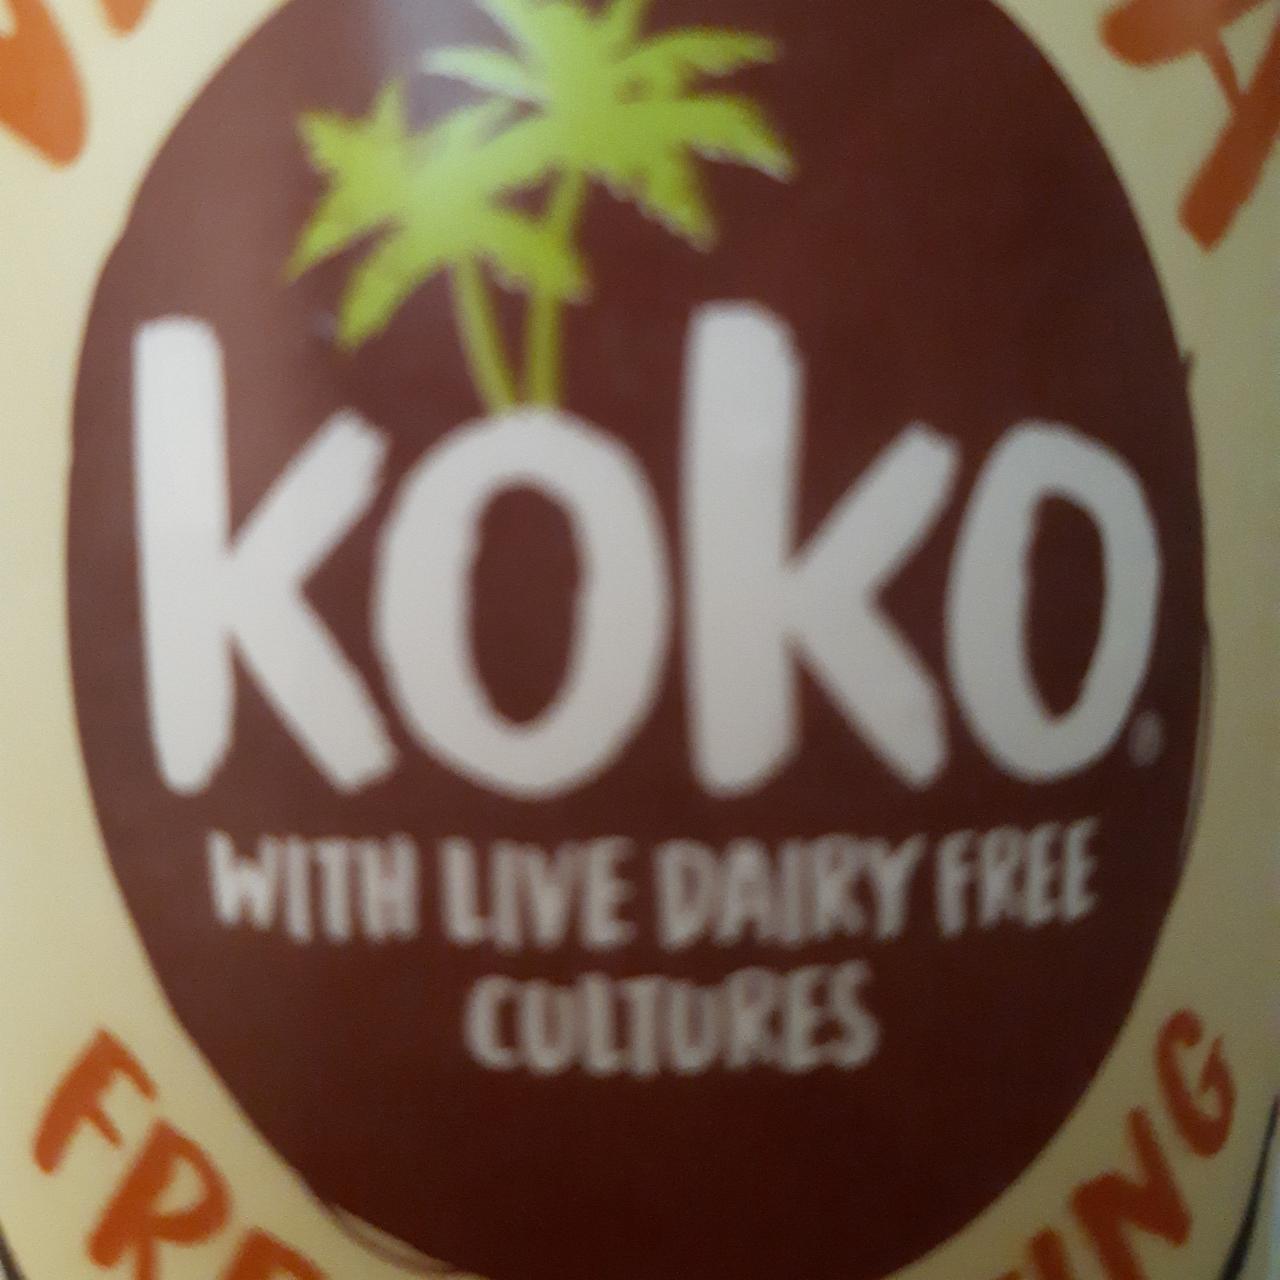 Fotografie - Koko with live Dairy Free cultures Vanilla